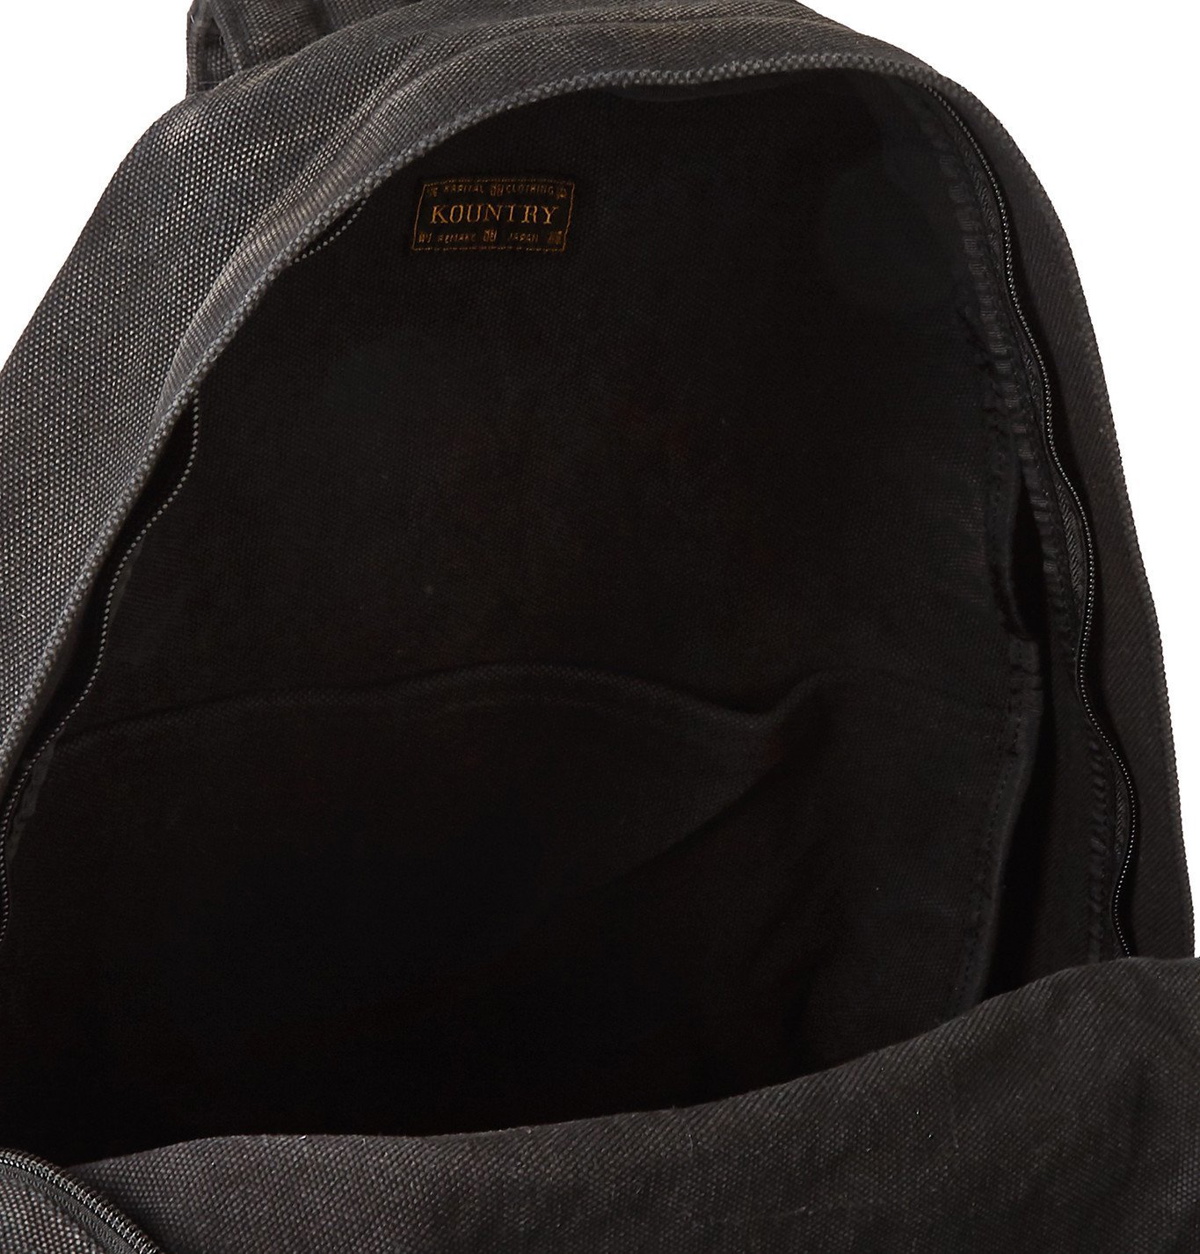 KAPITAL - Distressed Appliquéd Canvas Backpack with Detachable